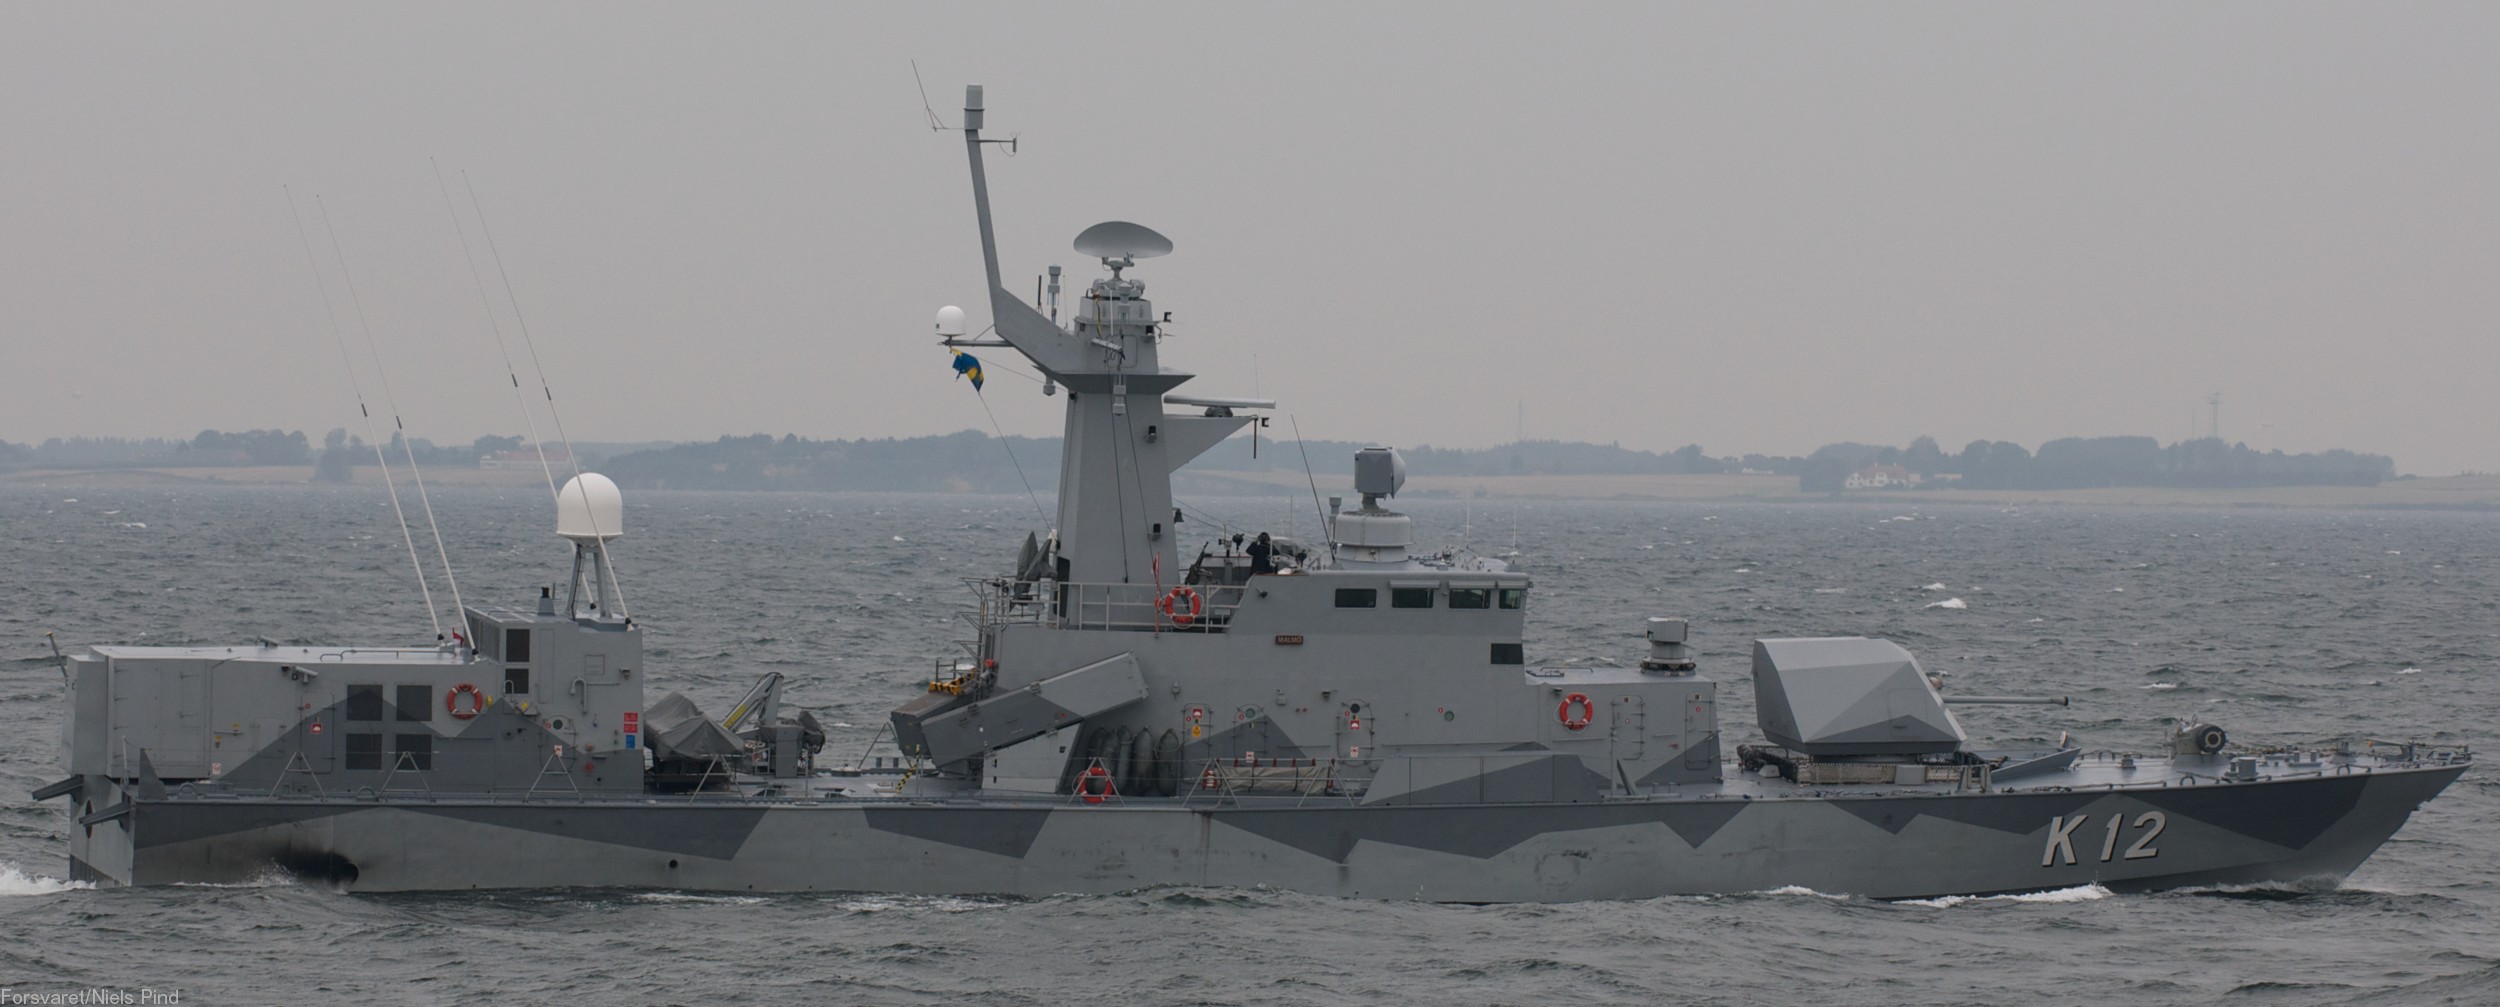 K12 P12 hswms malmö hms stockholm class corvette patrol vessel swedish navy svenska marinen forsvarsmakten 02